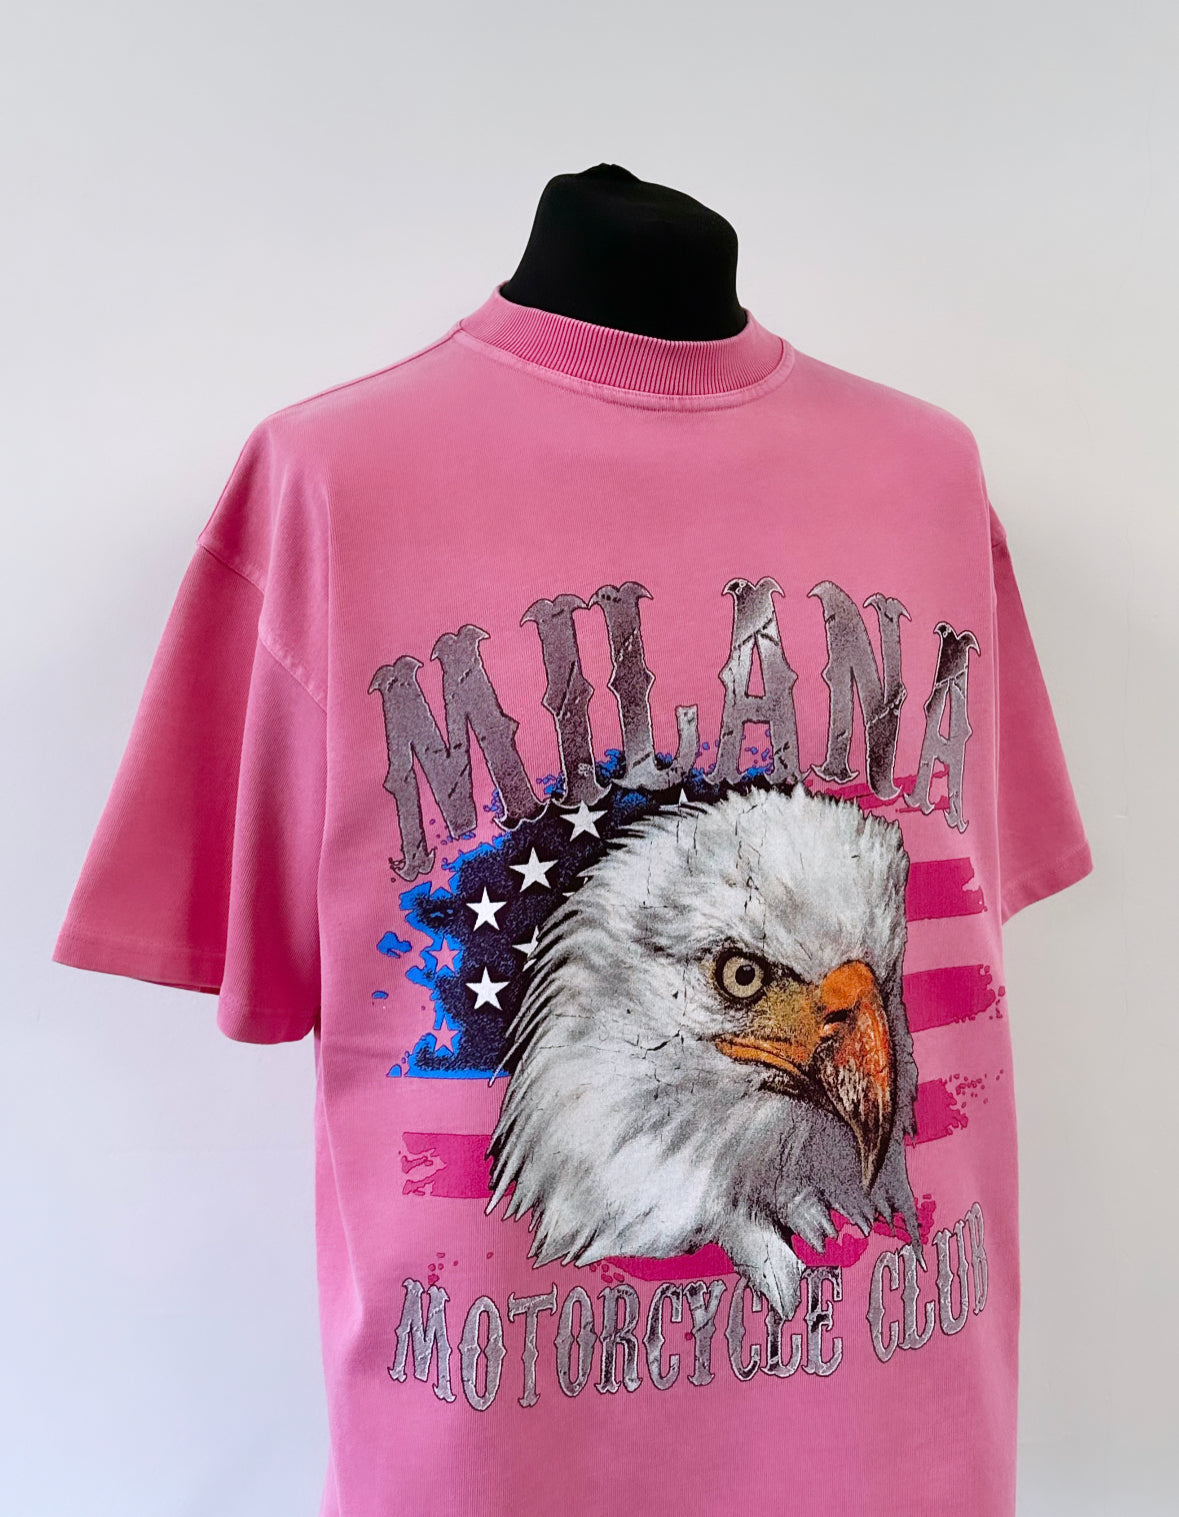 Washed Powder Pink Heavyweight Vintage T-shirt.